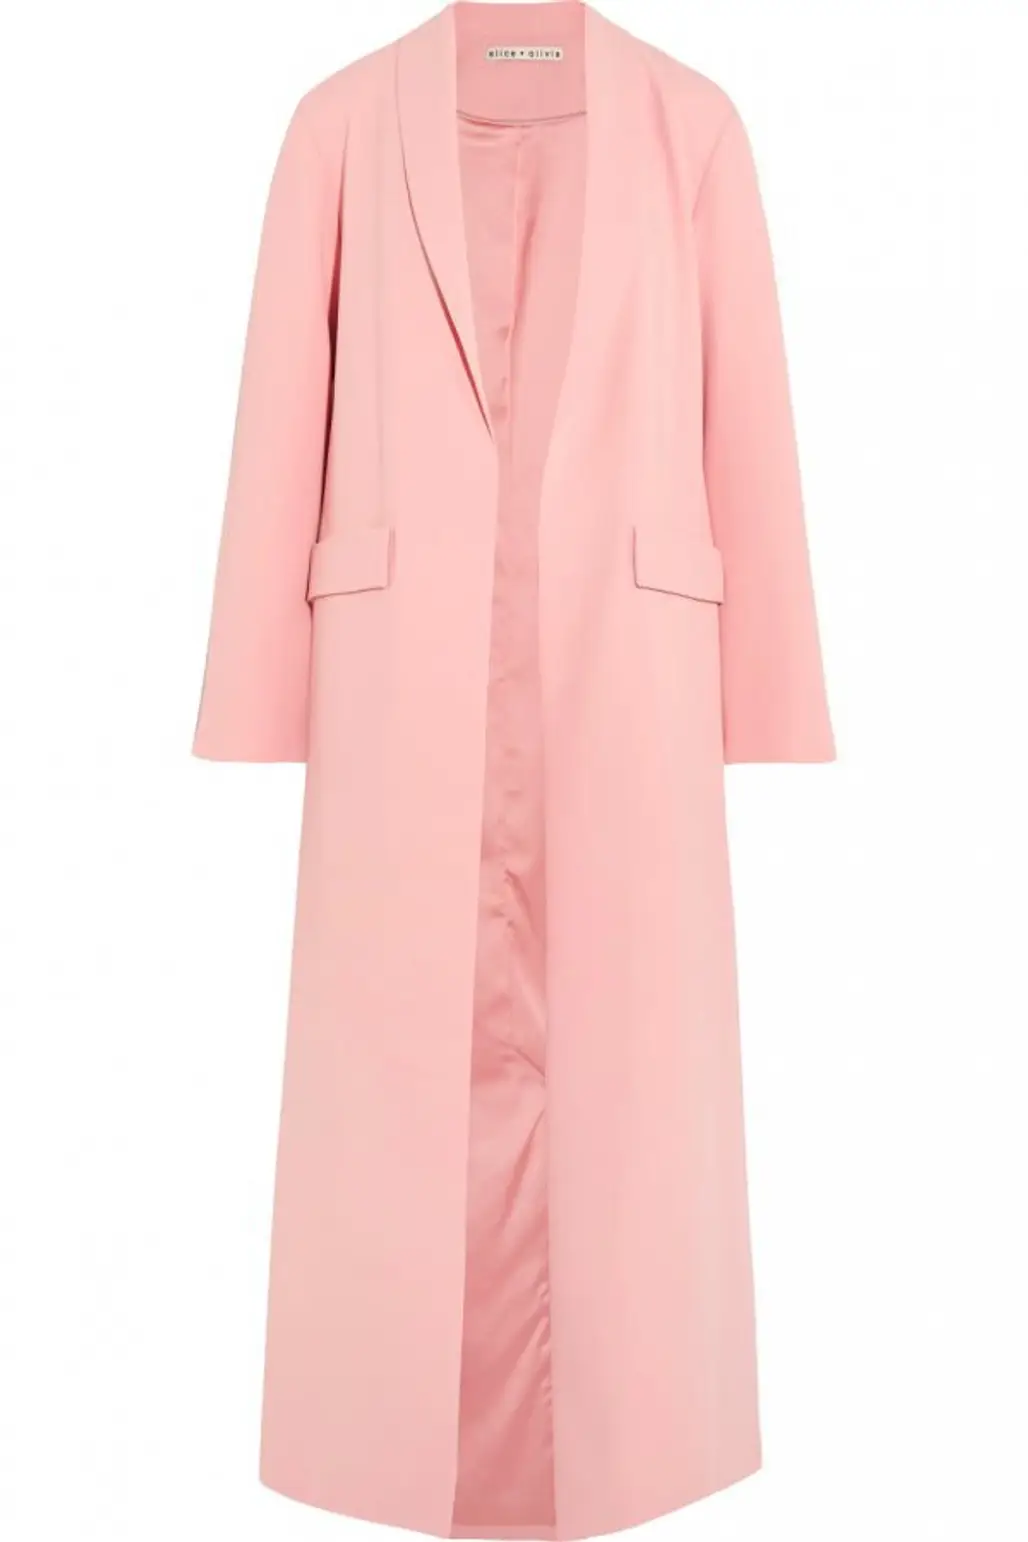 clothing, pink, day dress, coat, dress,